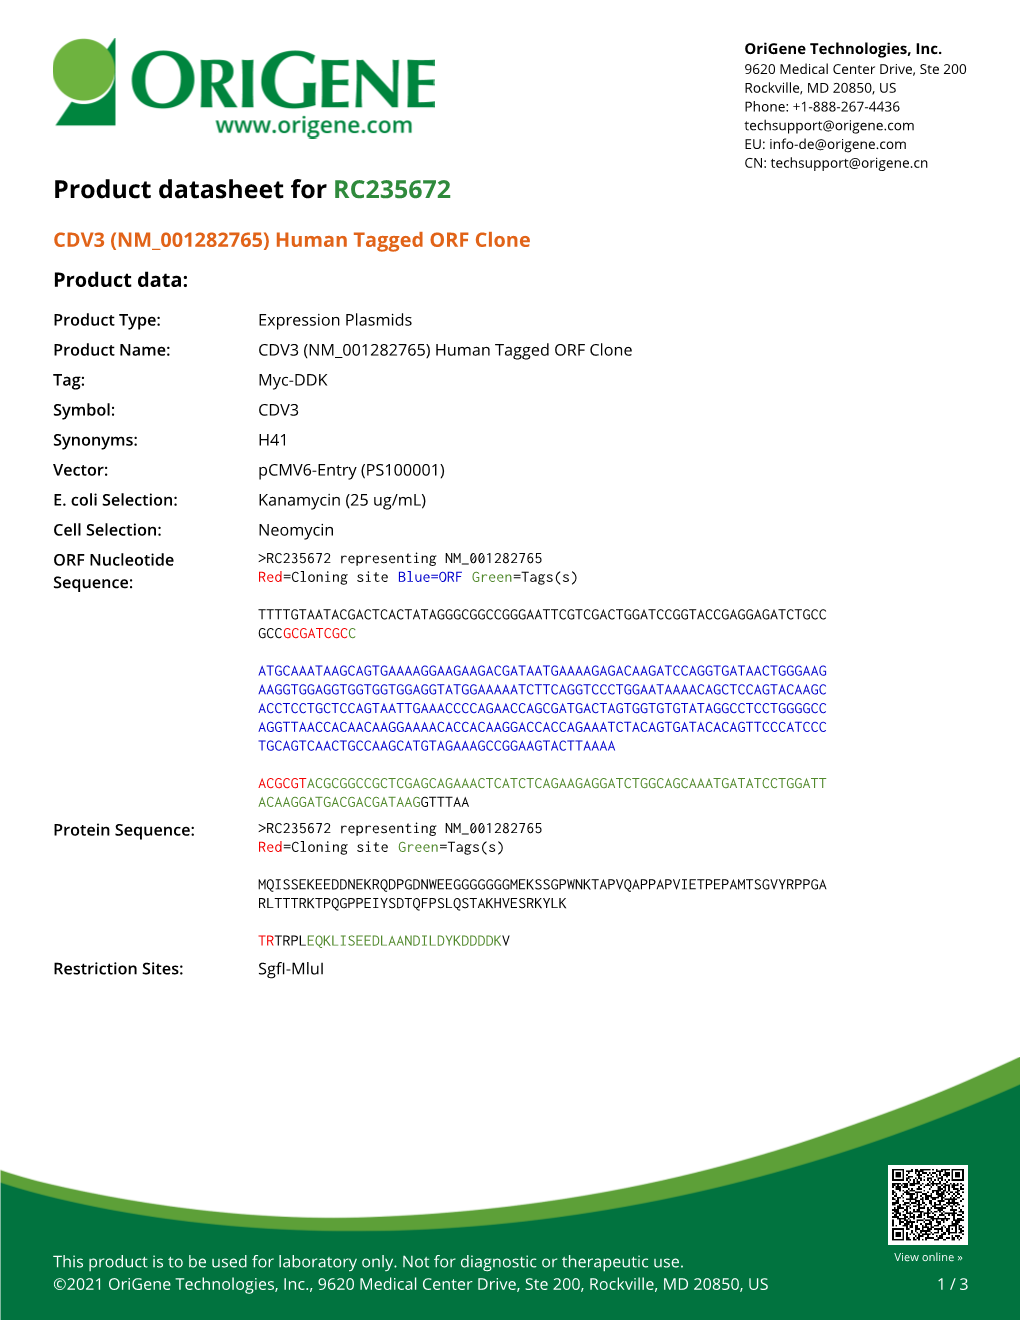 CDV3 (NM 001282765) Human Tagged ORF Clone Product Data